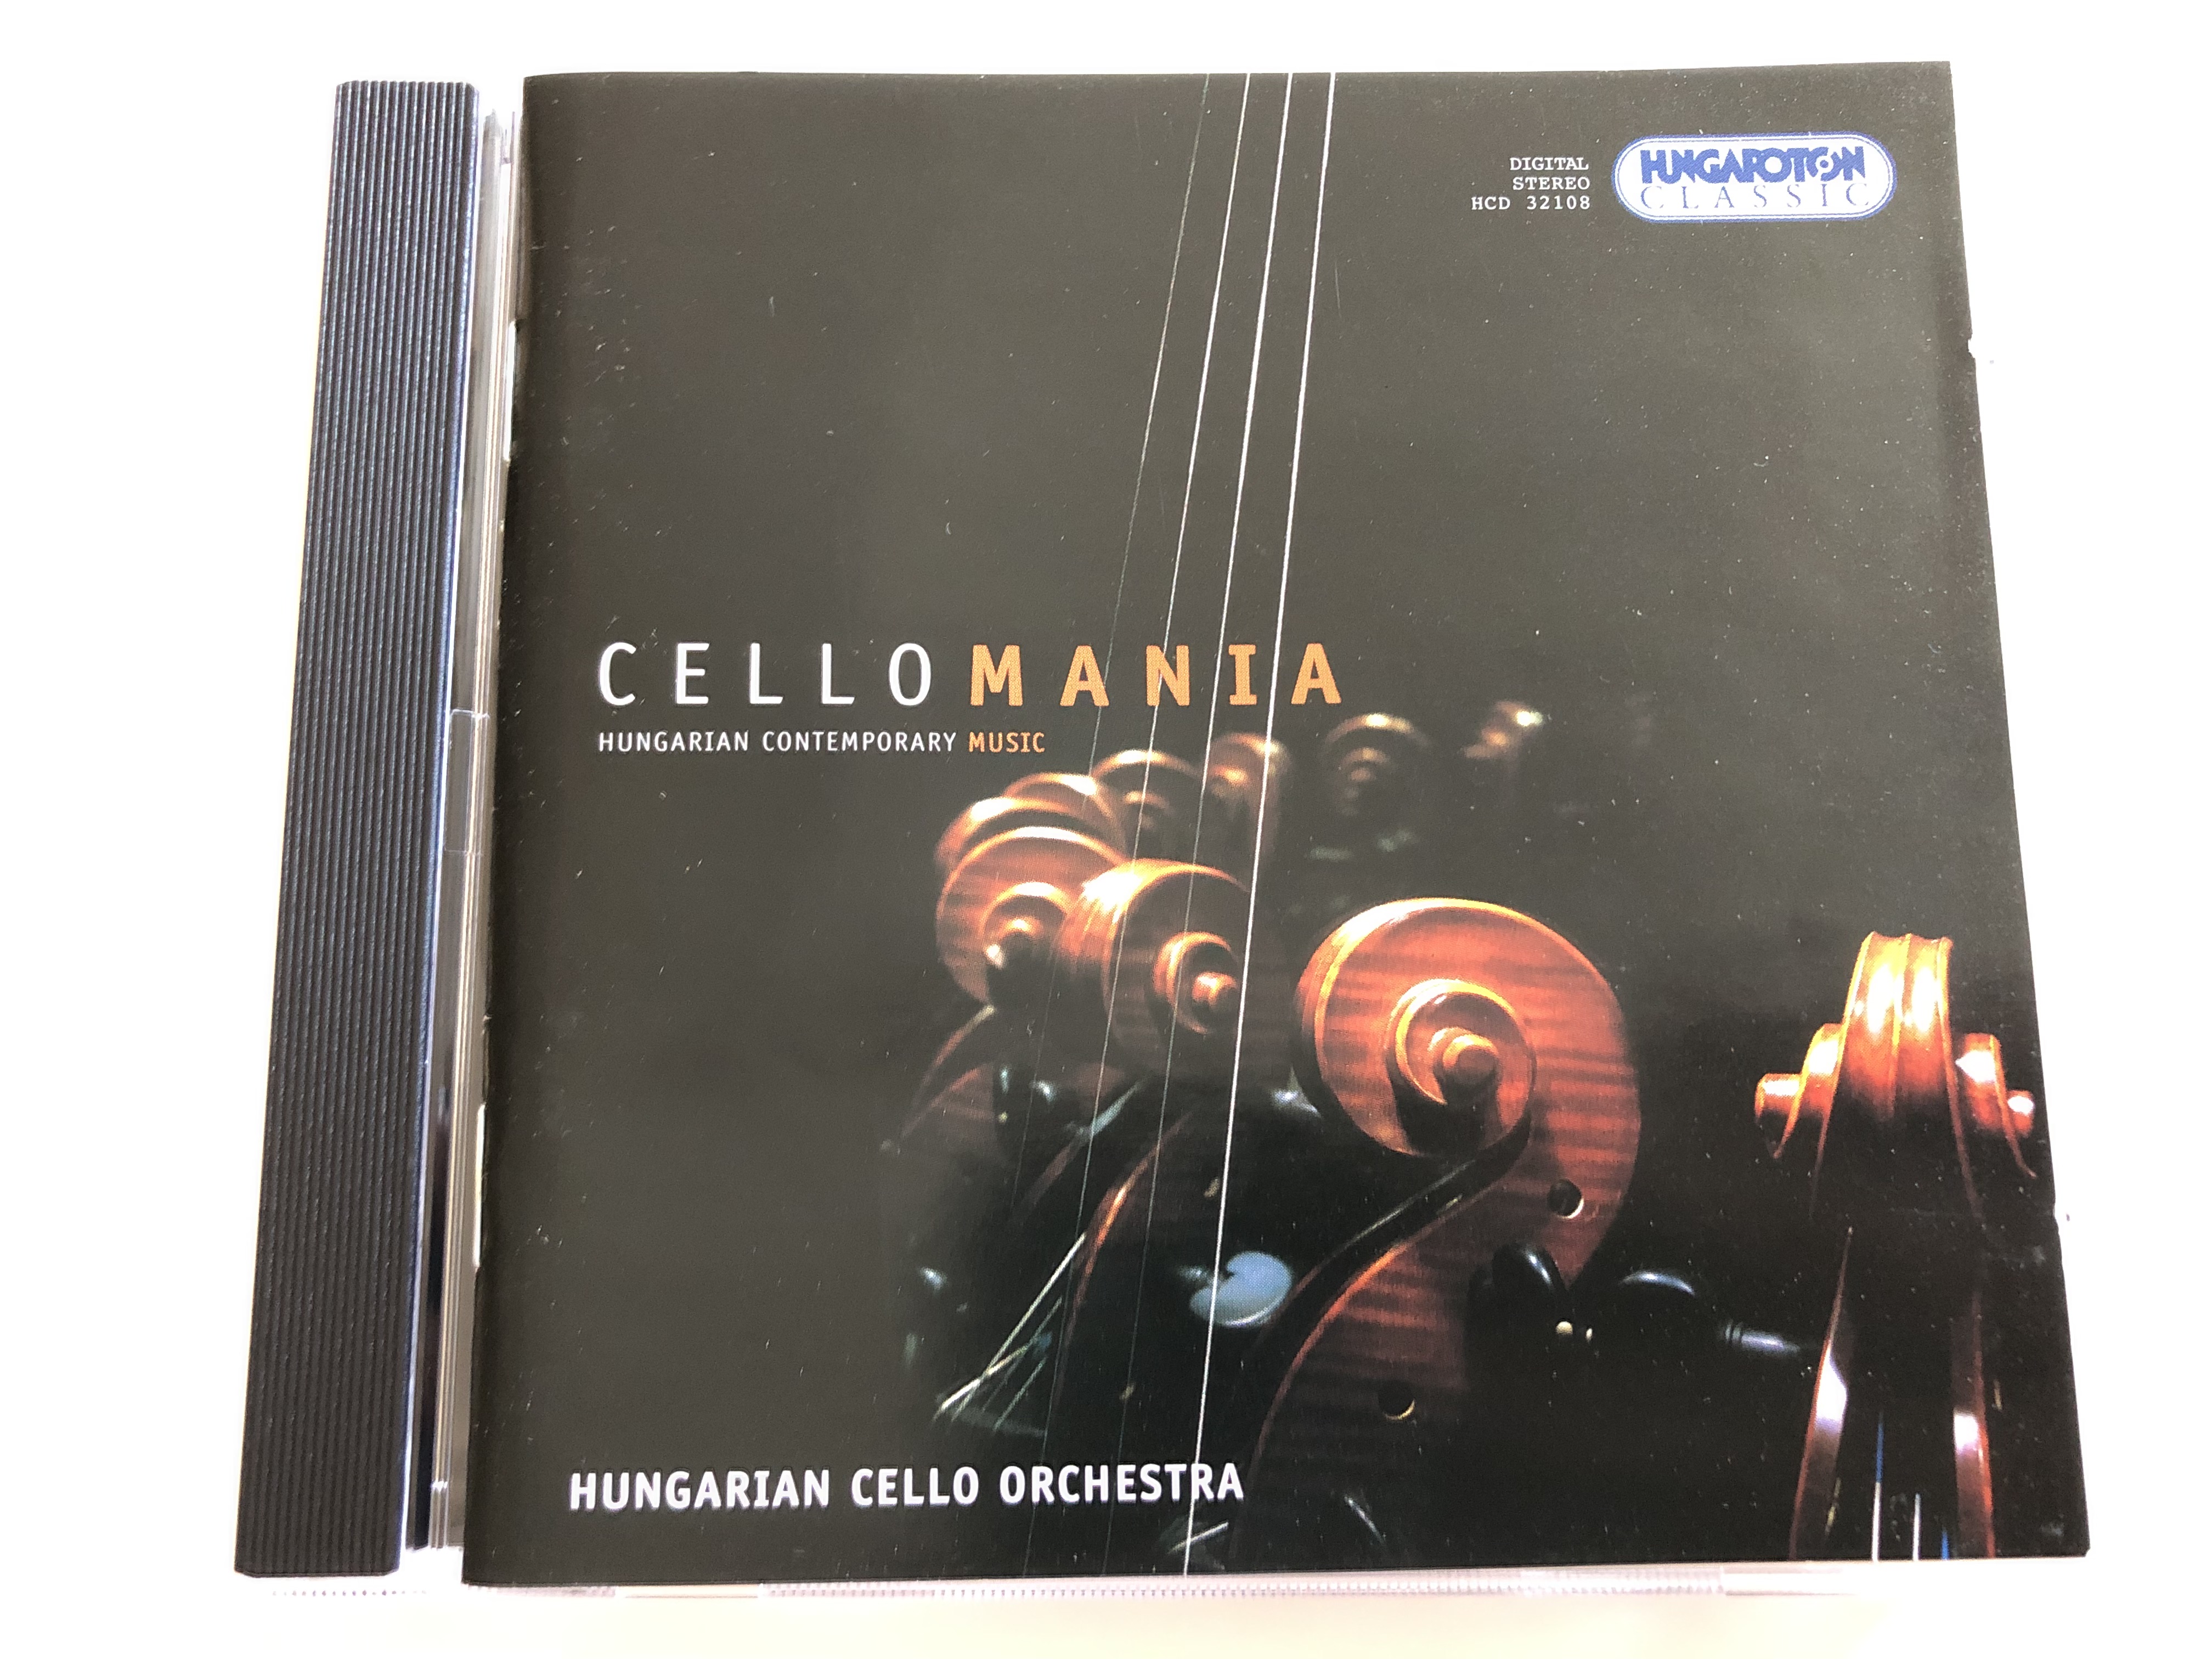 cellomania-hungarian-contemporary-music-hungarian-cello-orchestra-audio-cd-2003-works-by-zolt-n-kov-cs-l-szl-kir-ly-levente-gy-ngy-si-j-nos-vajda-m-t-holl-s-kos-b-nlaki-l-szl-melis-hungaroton-classic-1-.jpg